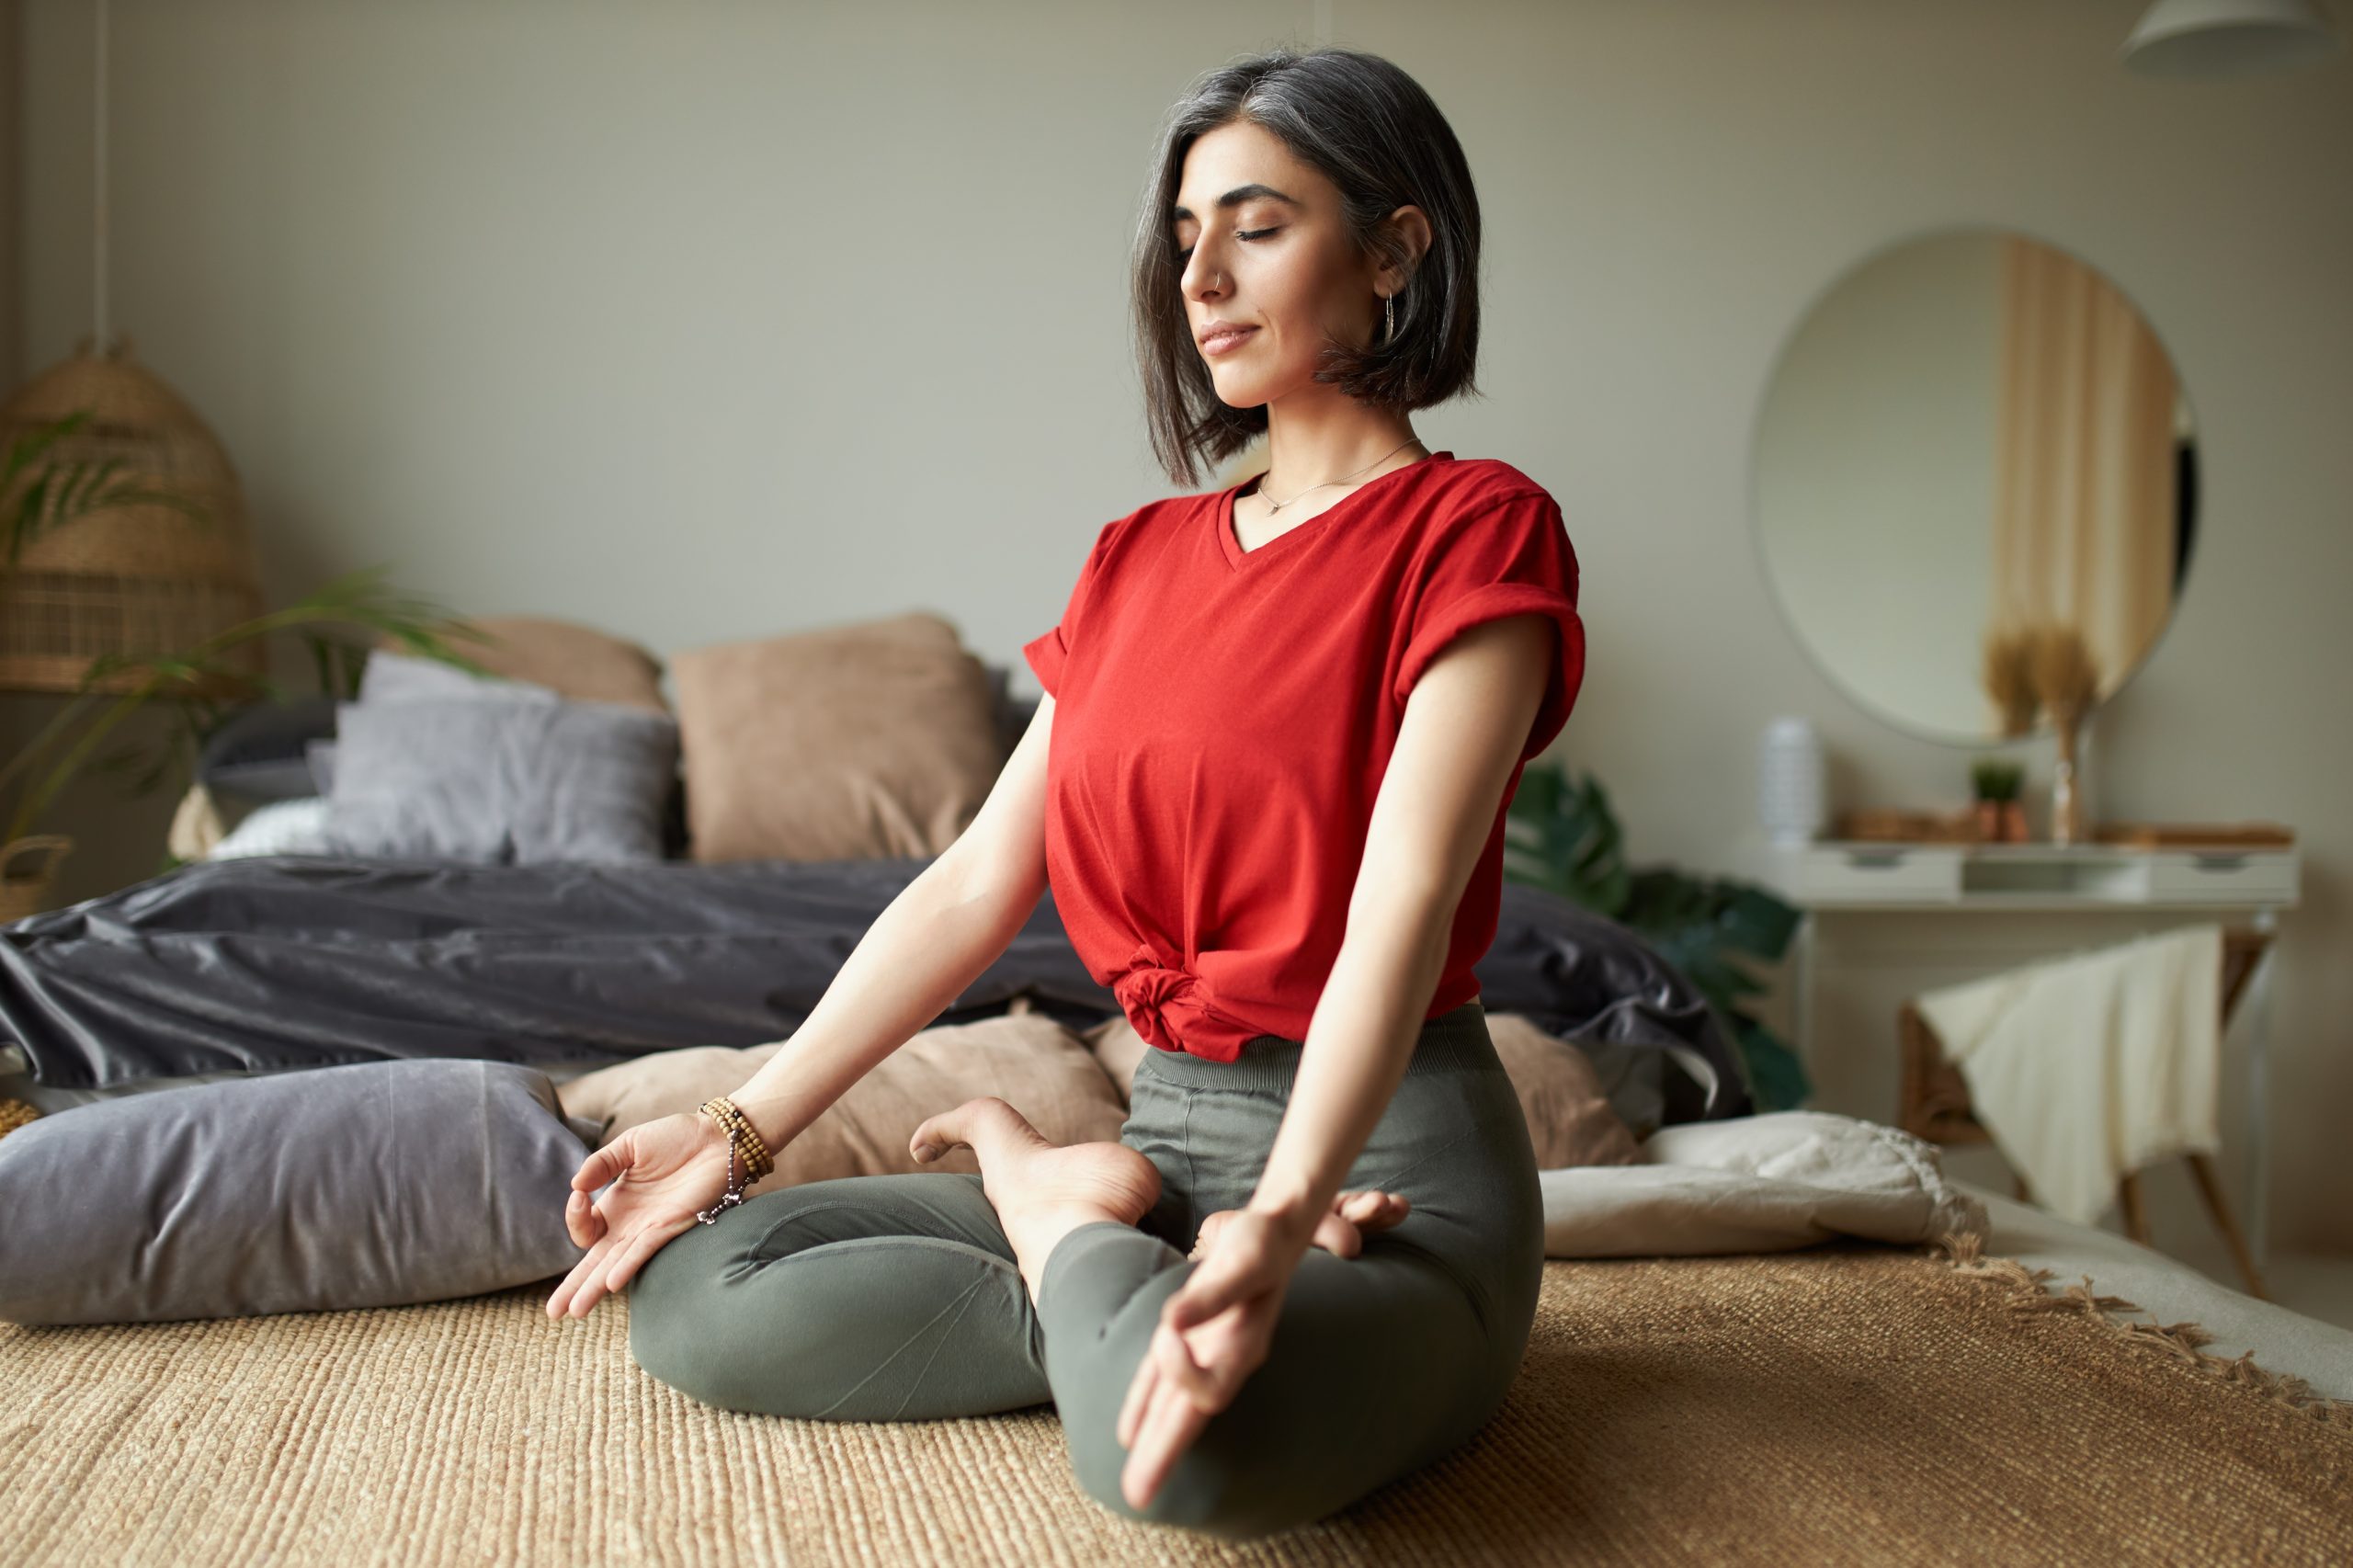 Técnicas perfectas para comenzar a meditar